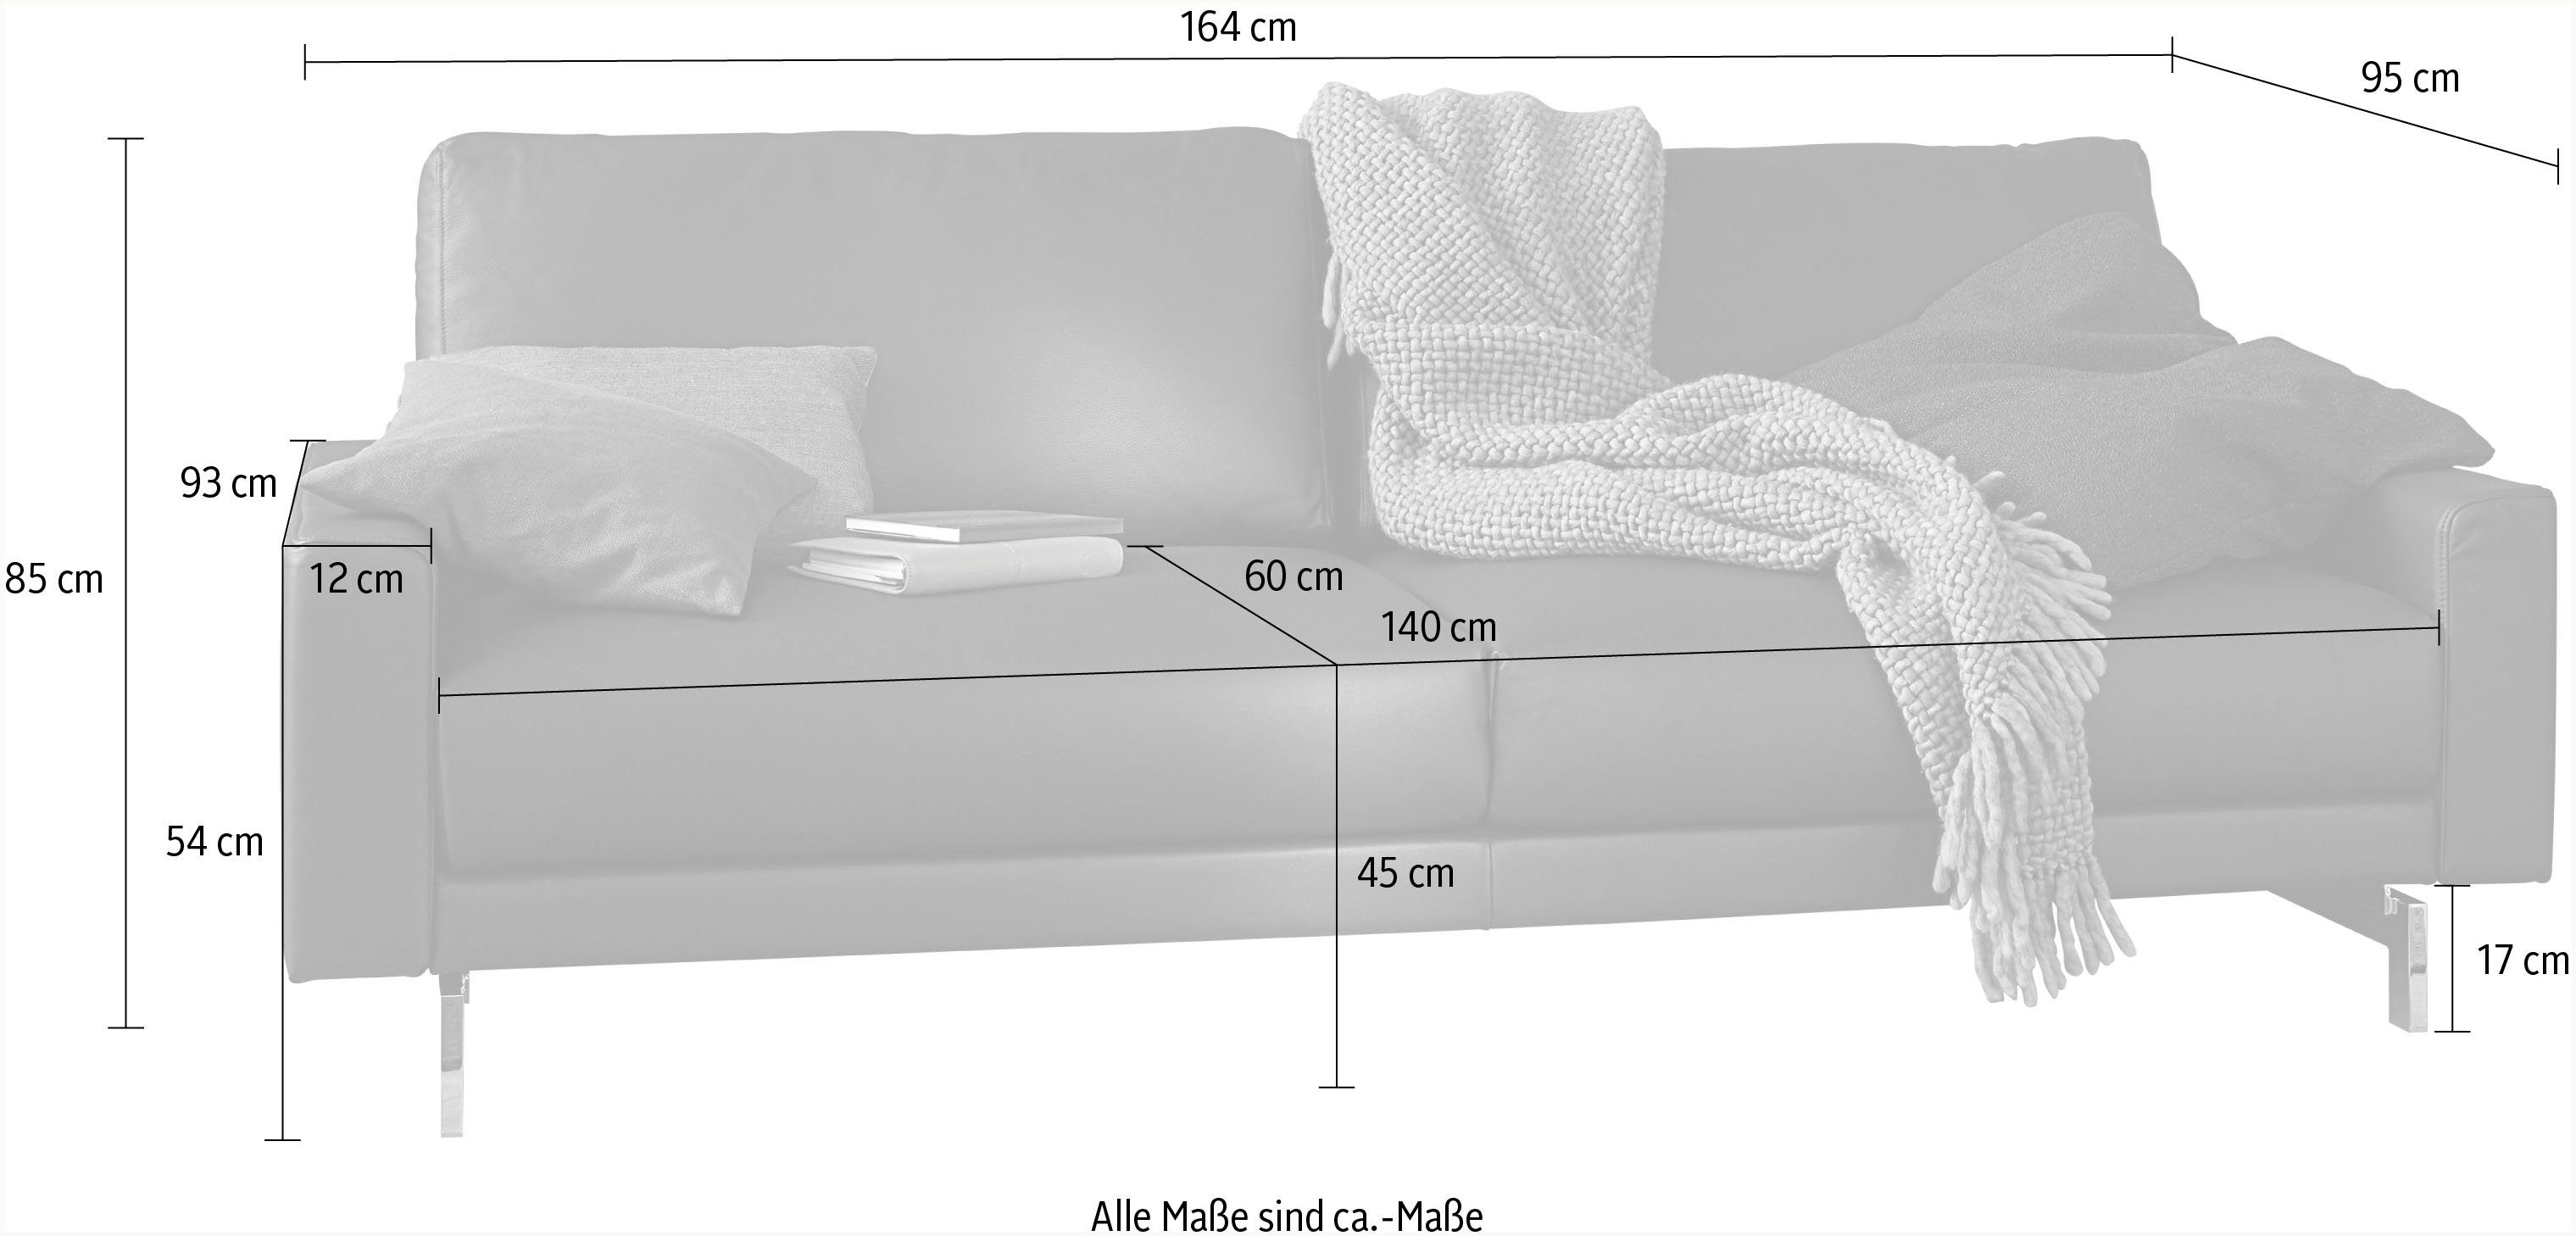 cm hs.450, 2-Sitzer sofa Fuß Breite glänzend, 164 niedrig, Armlehne hülsta chromfarben